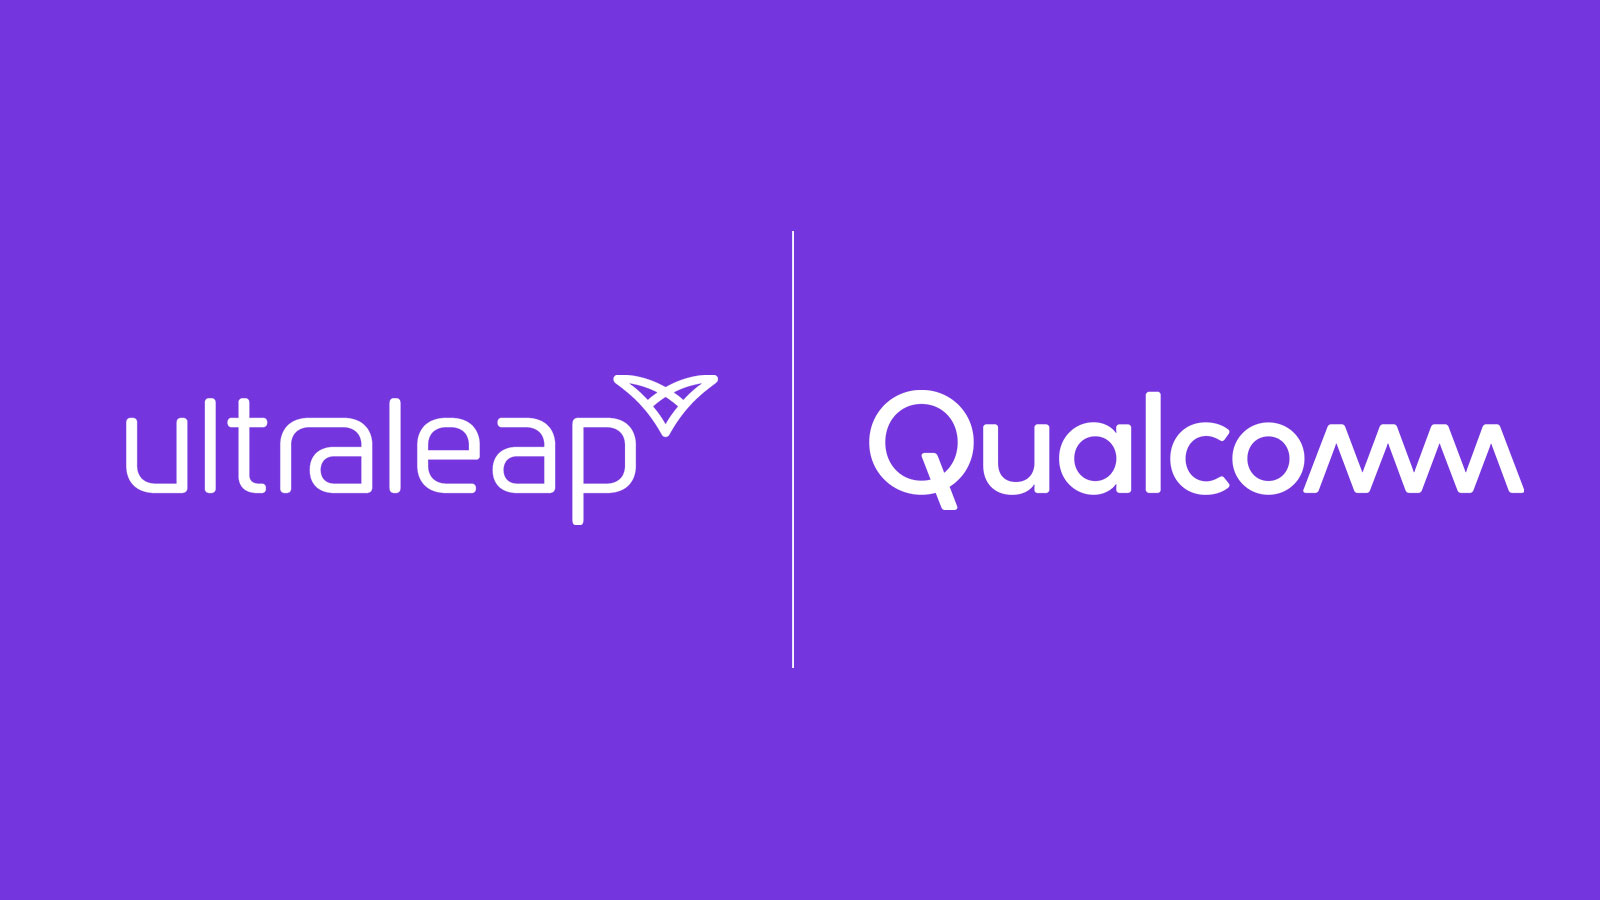 Ultraleap and Qualcomm logos